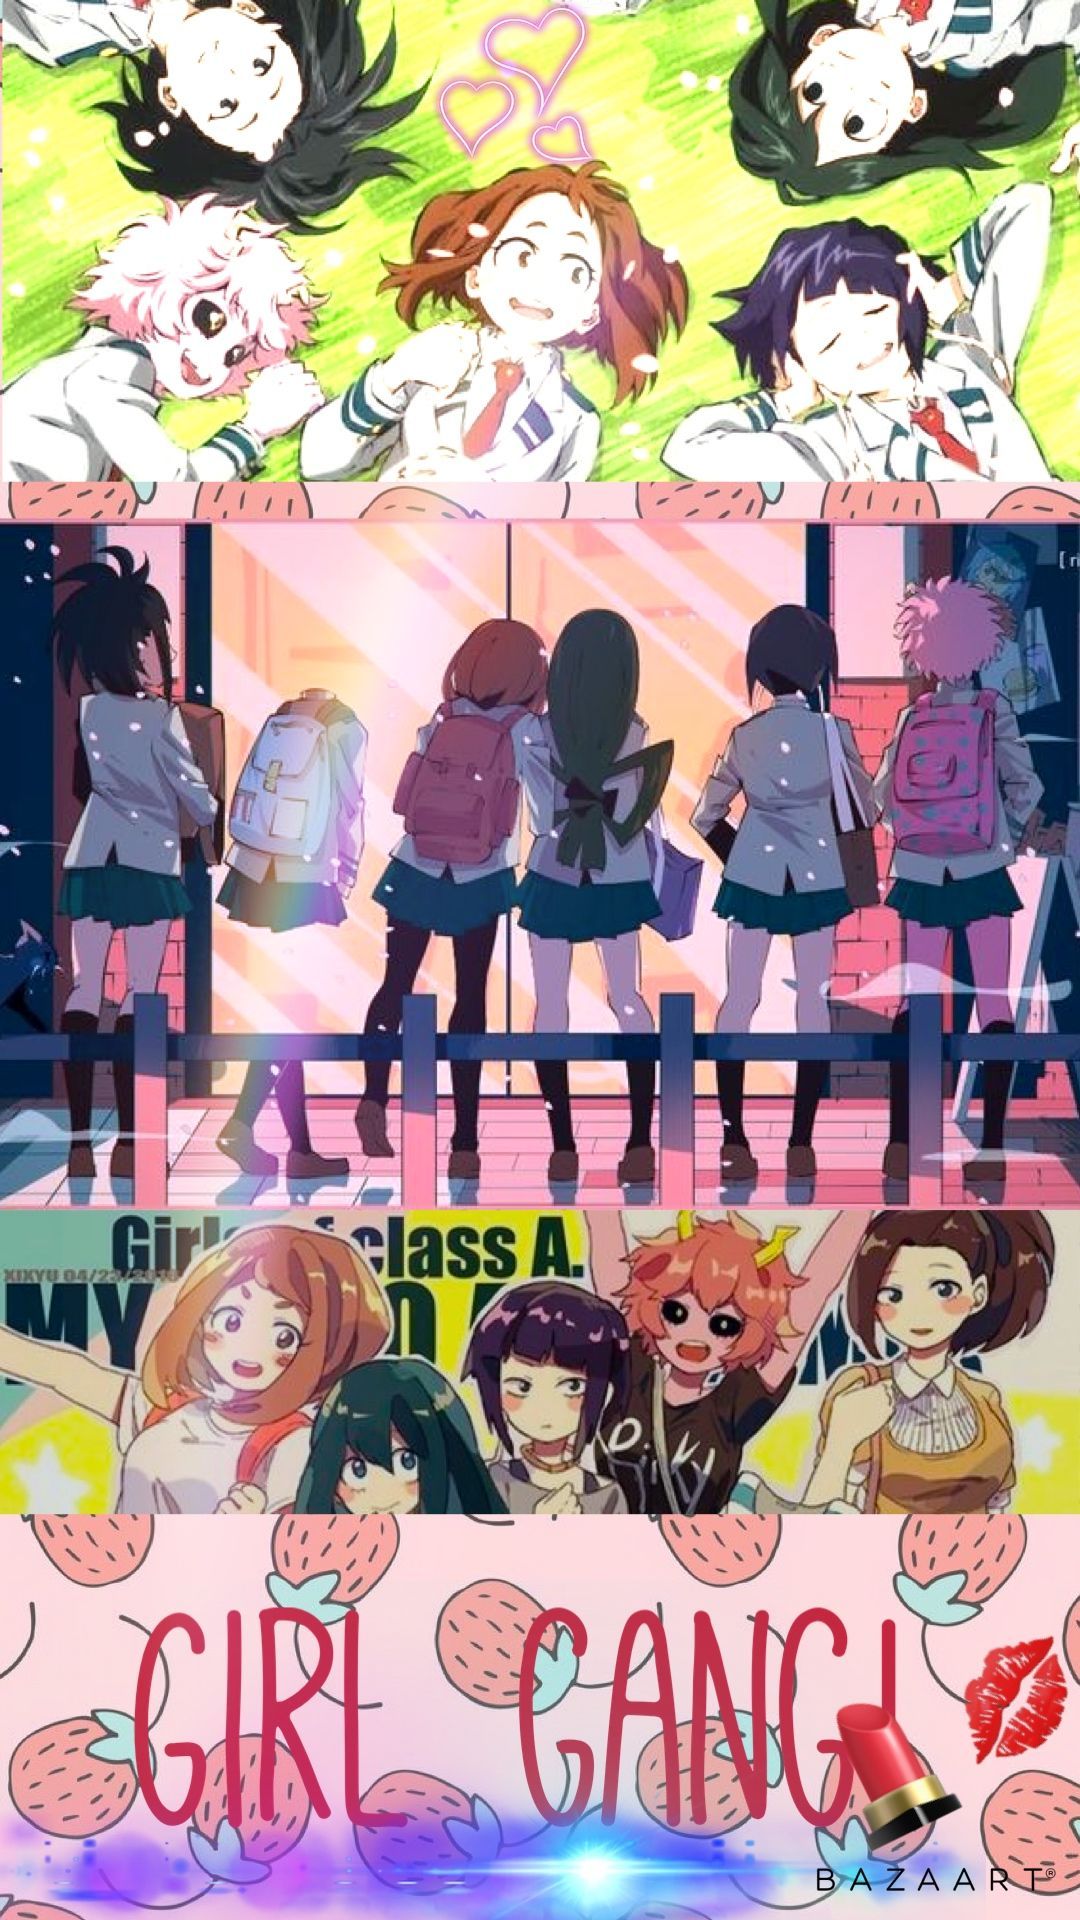 Class 1a girls wallpaper. Hero wallpaper, Girl wallpaper, My hero academia manga